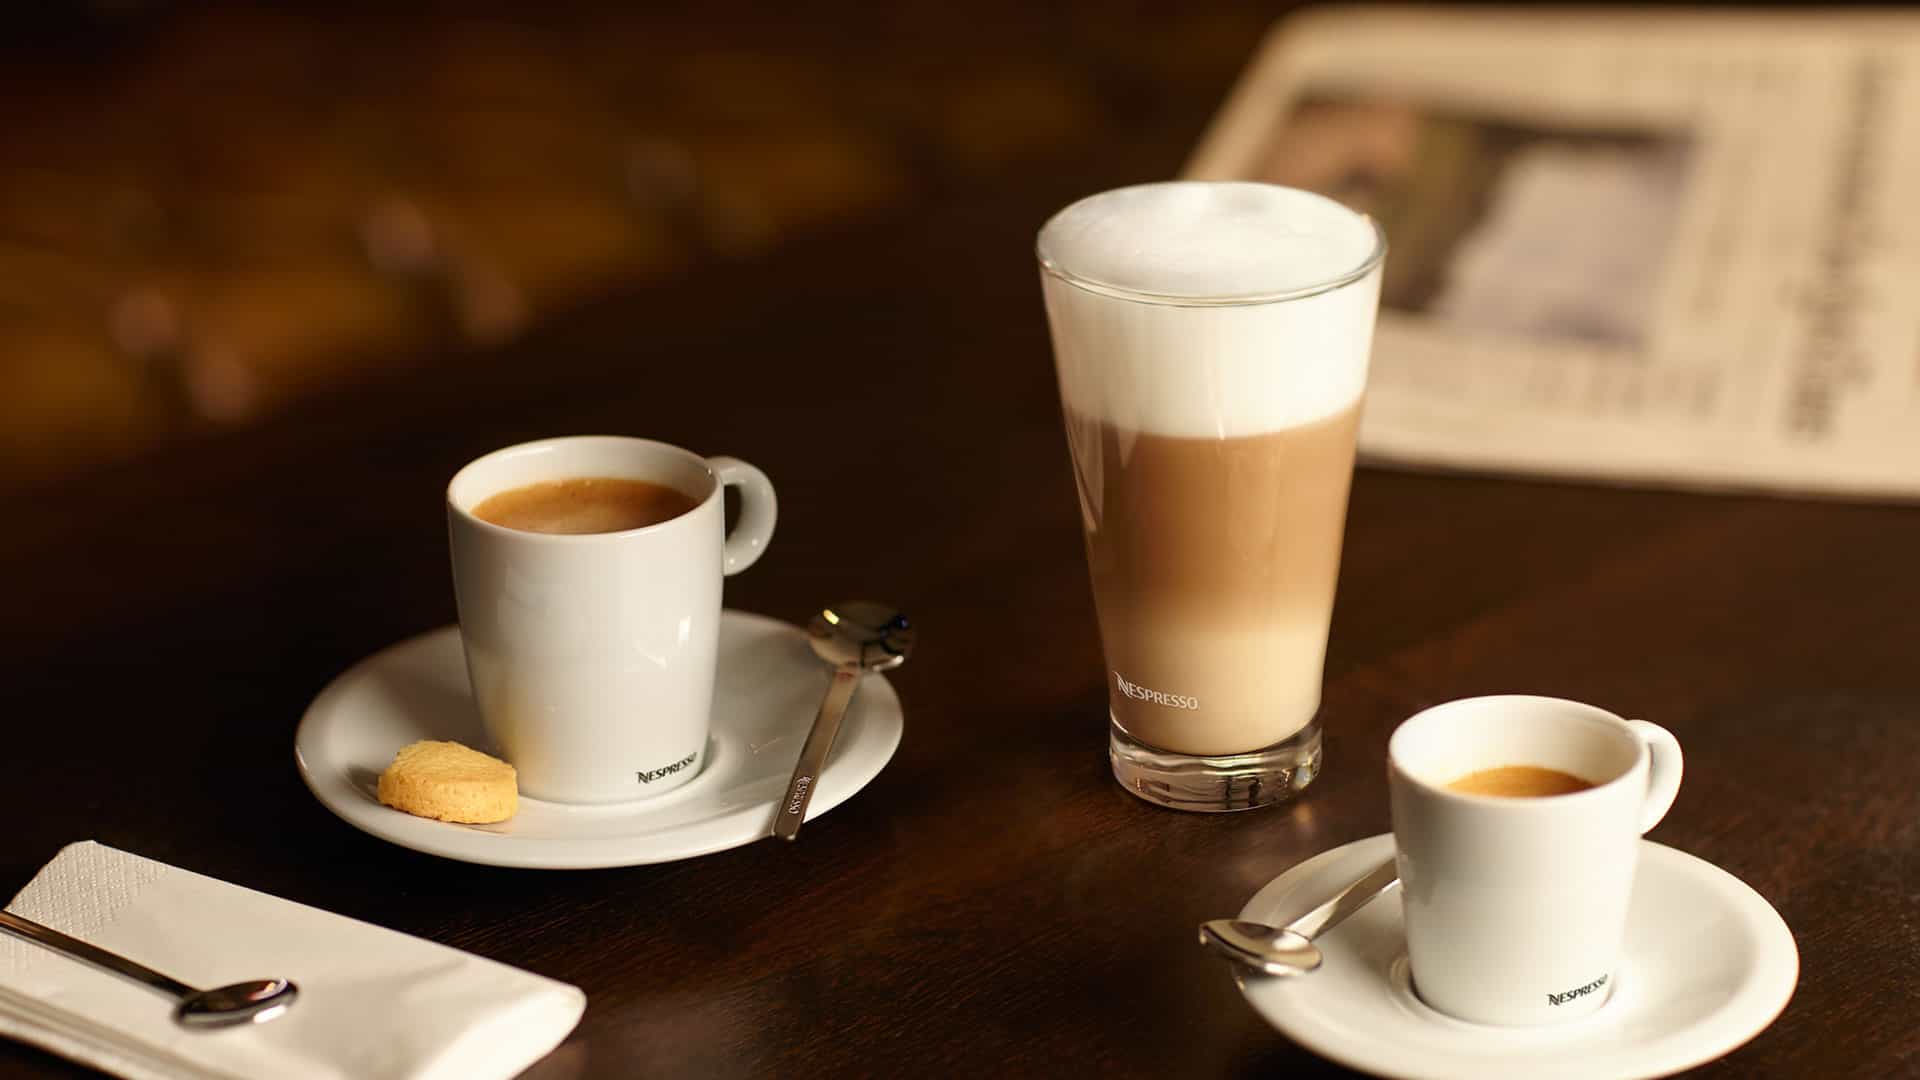 Nespresso coffees on display header image